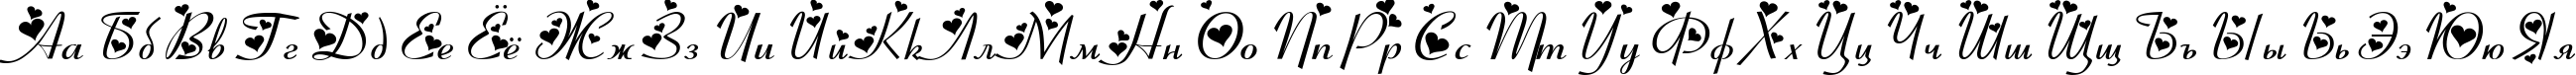 Пример написания русского алфавита шрифтом Ribbon Heart